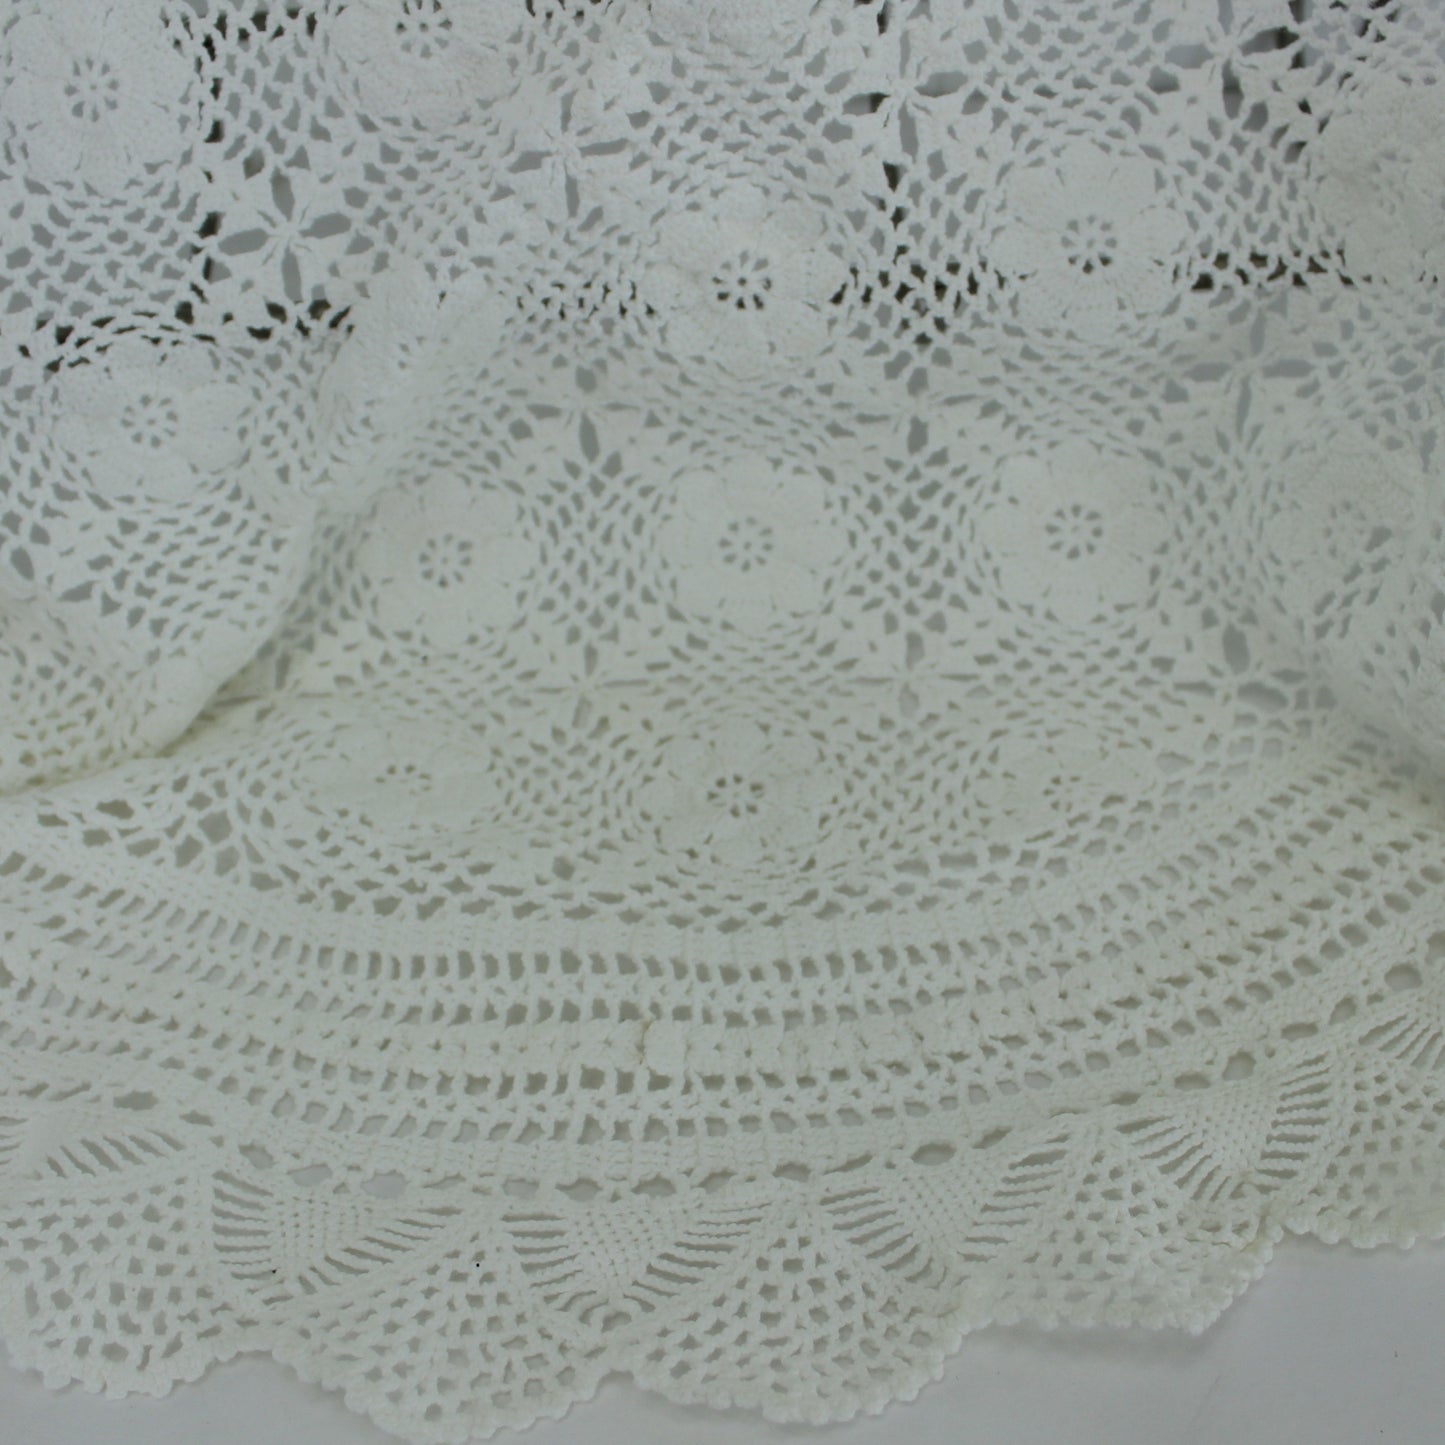 Large Round Crochet Doily Tablecloth White Heavy Cotton 30" Diameter closeup ruffle edge